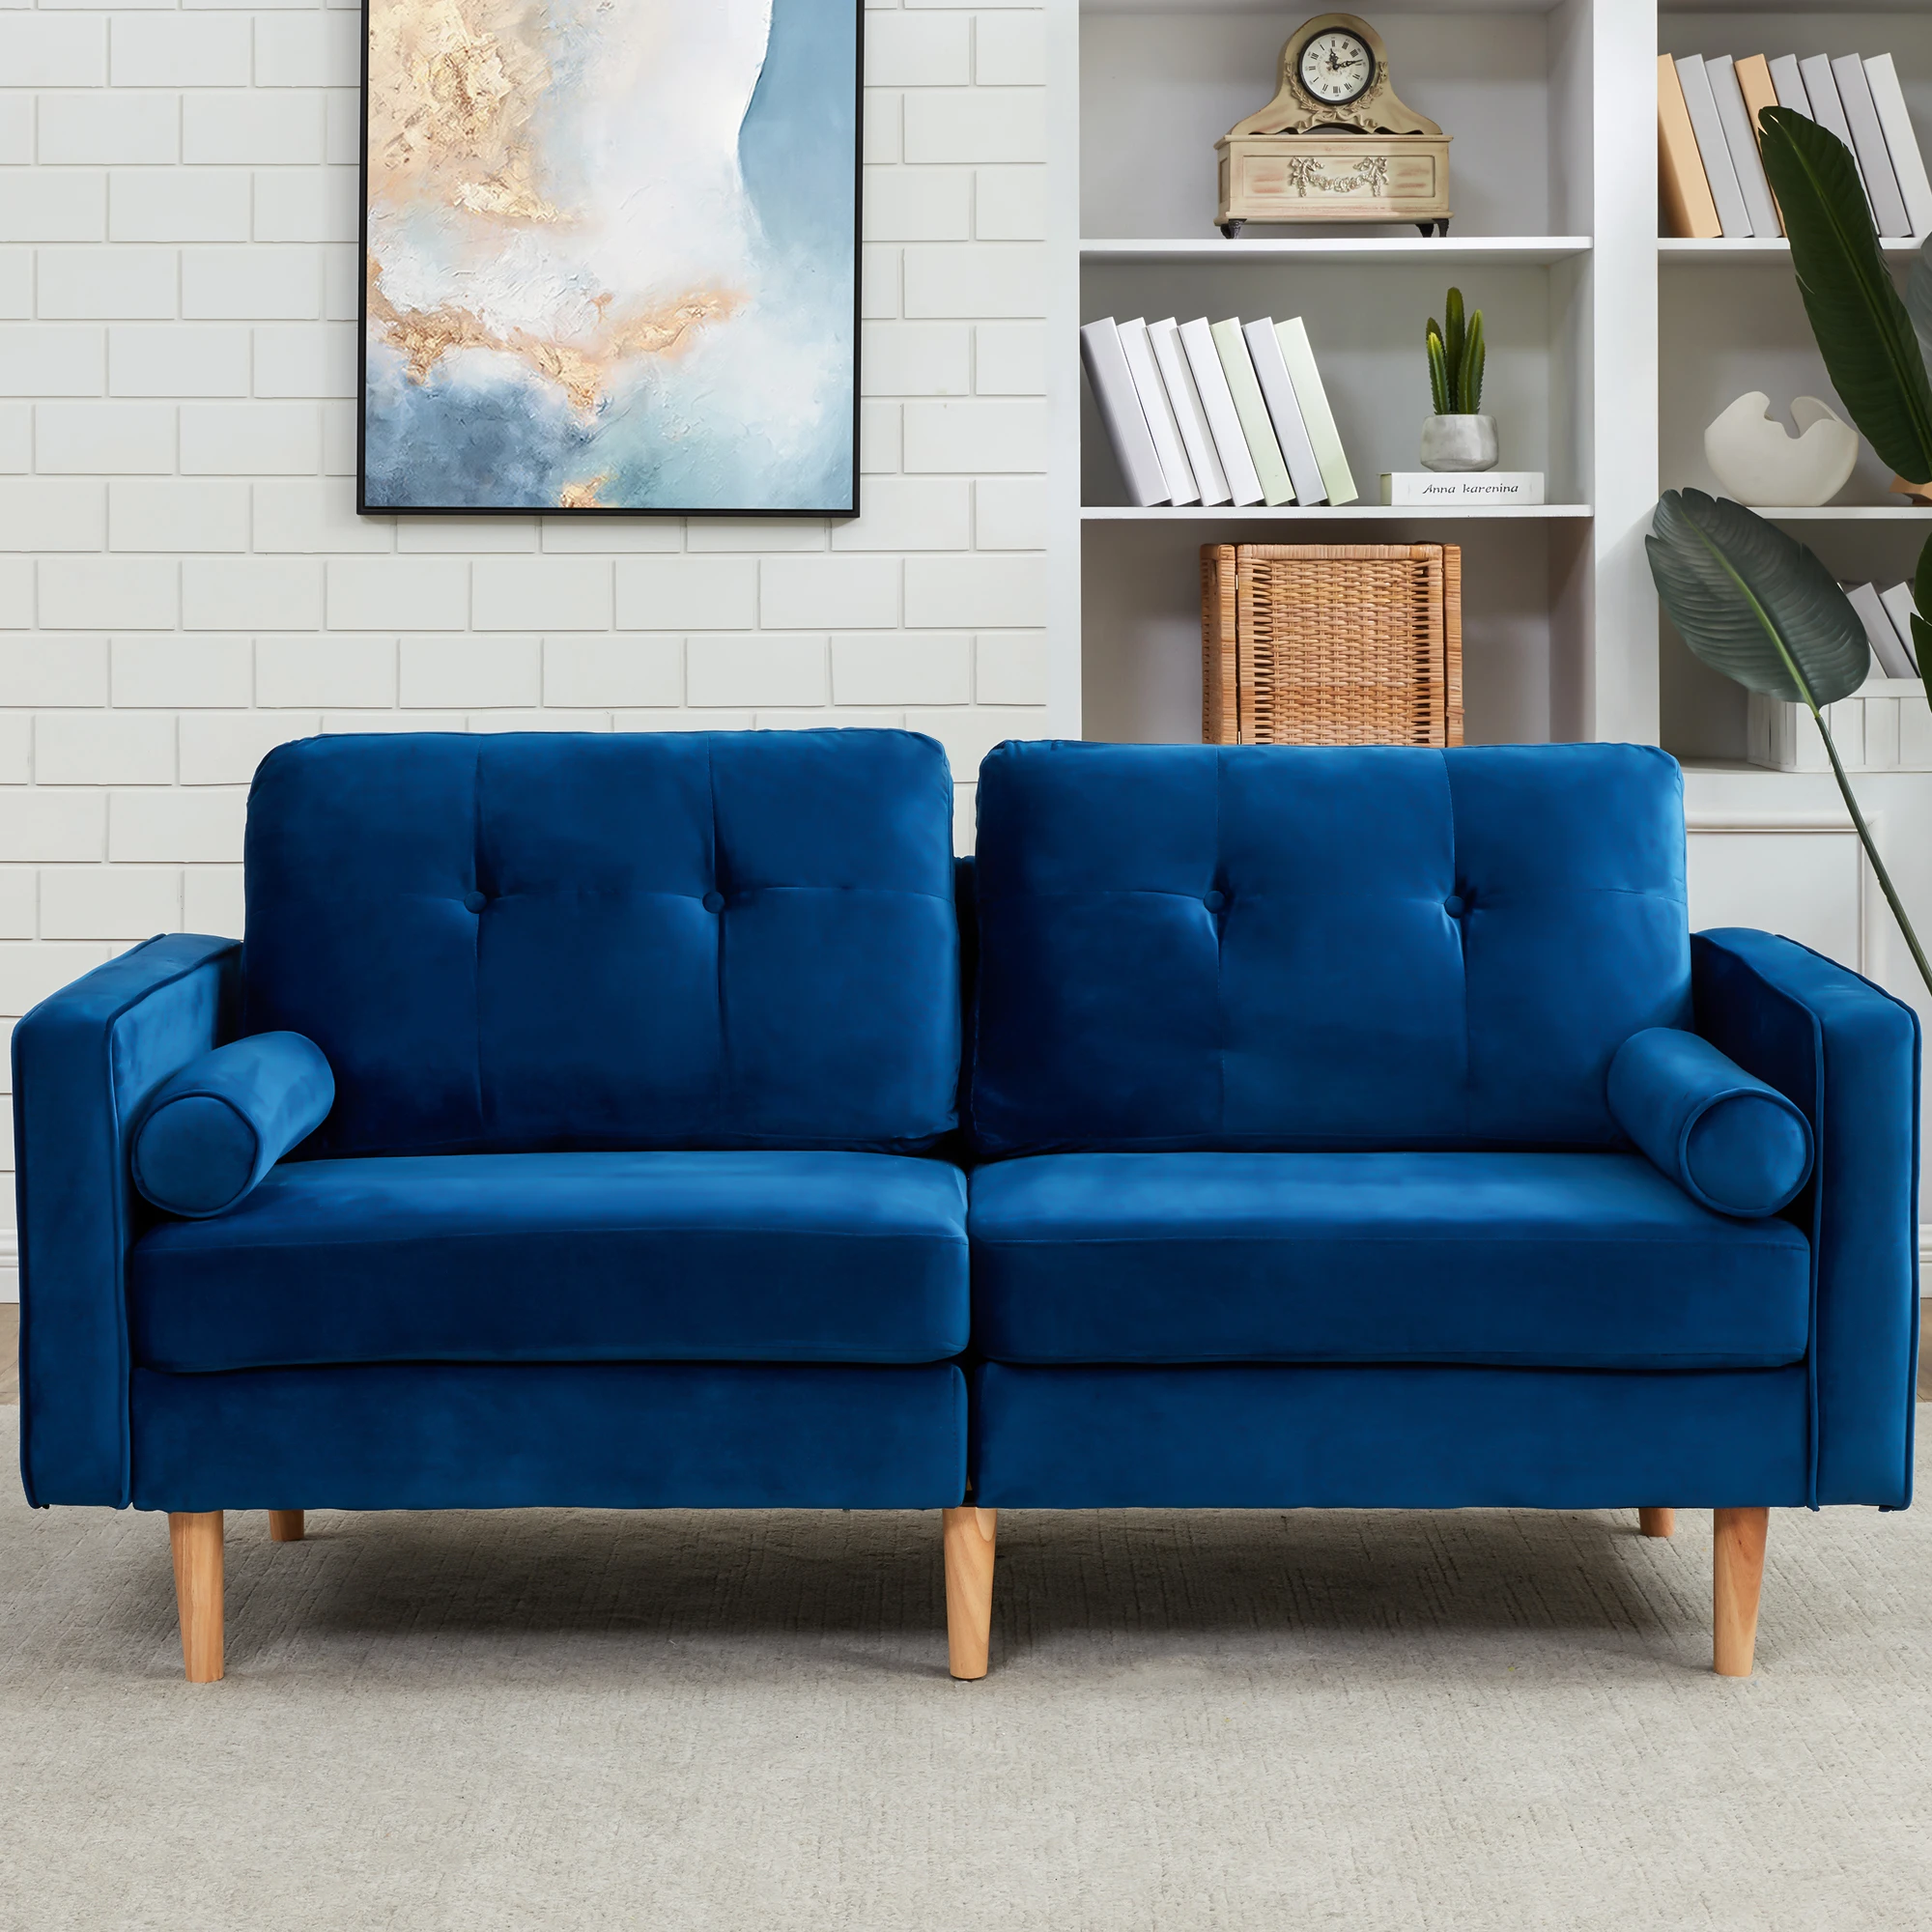 2 Seater Velvet Sofa, 2 Seater Sofa Set, Wooden Feet, Upholstered Sofa In A Stylish And Elegant Dark Blue Noble Button Stit - Living Room Sofas -